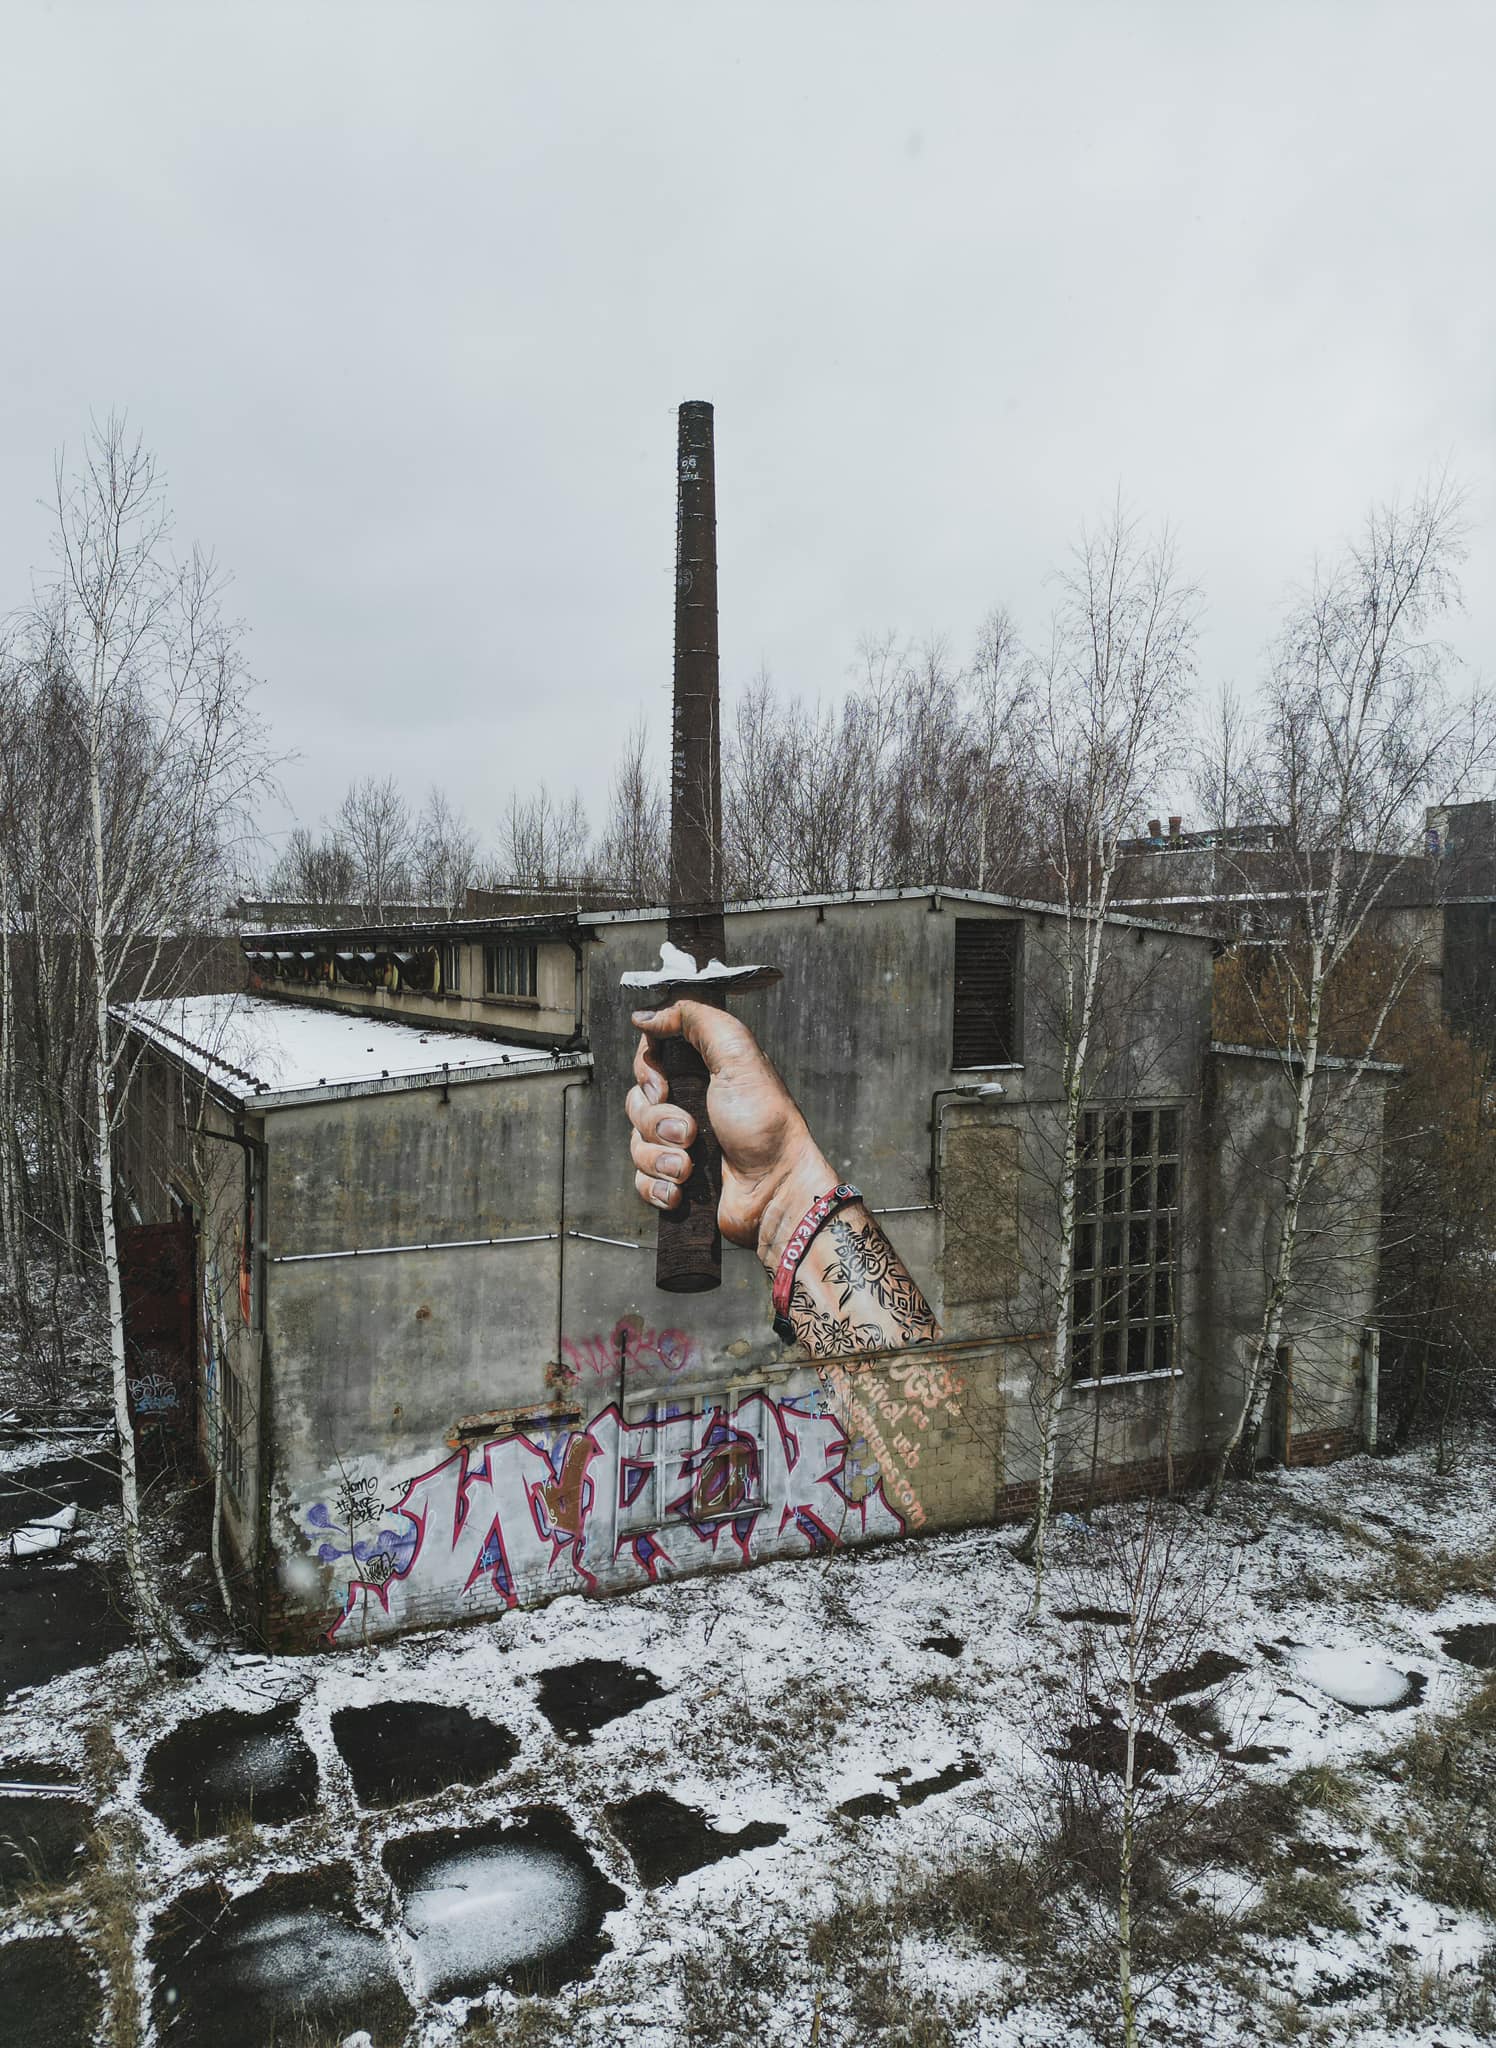 usine abandonnée